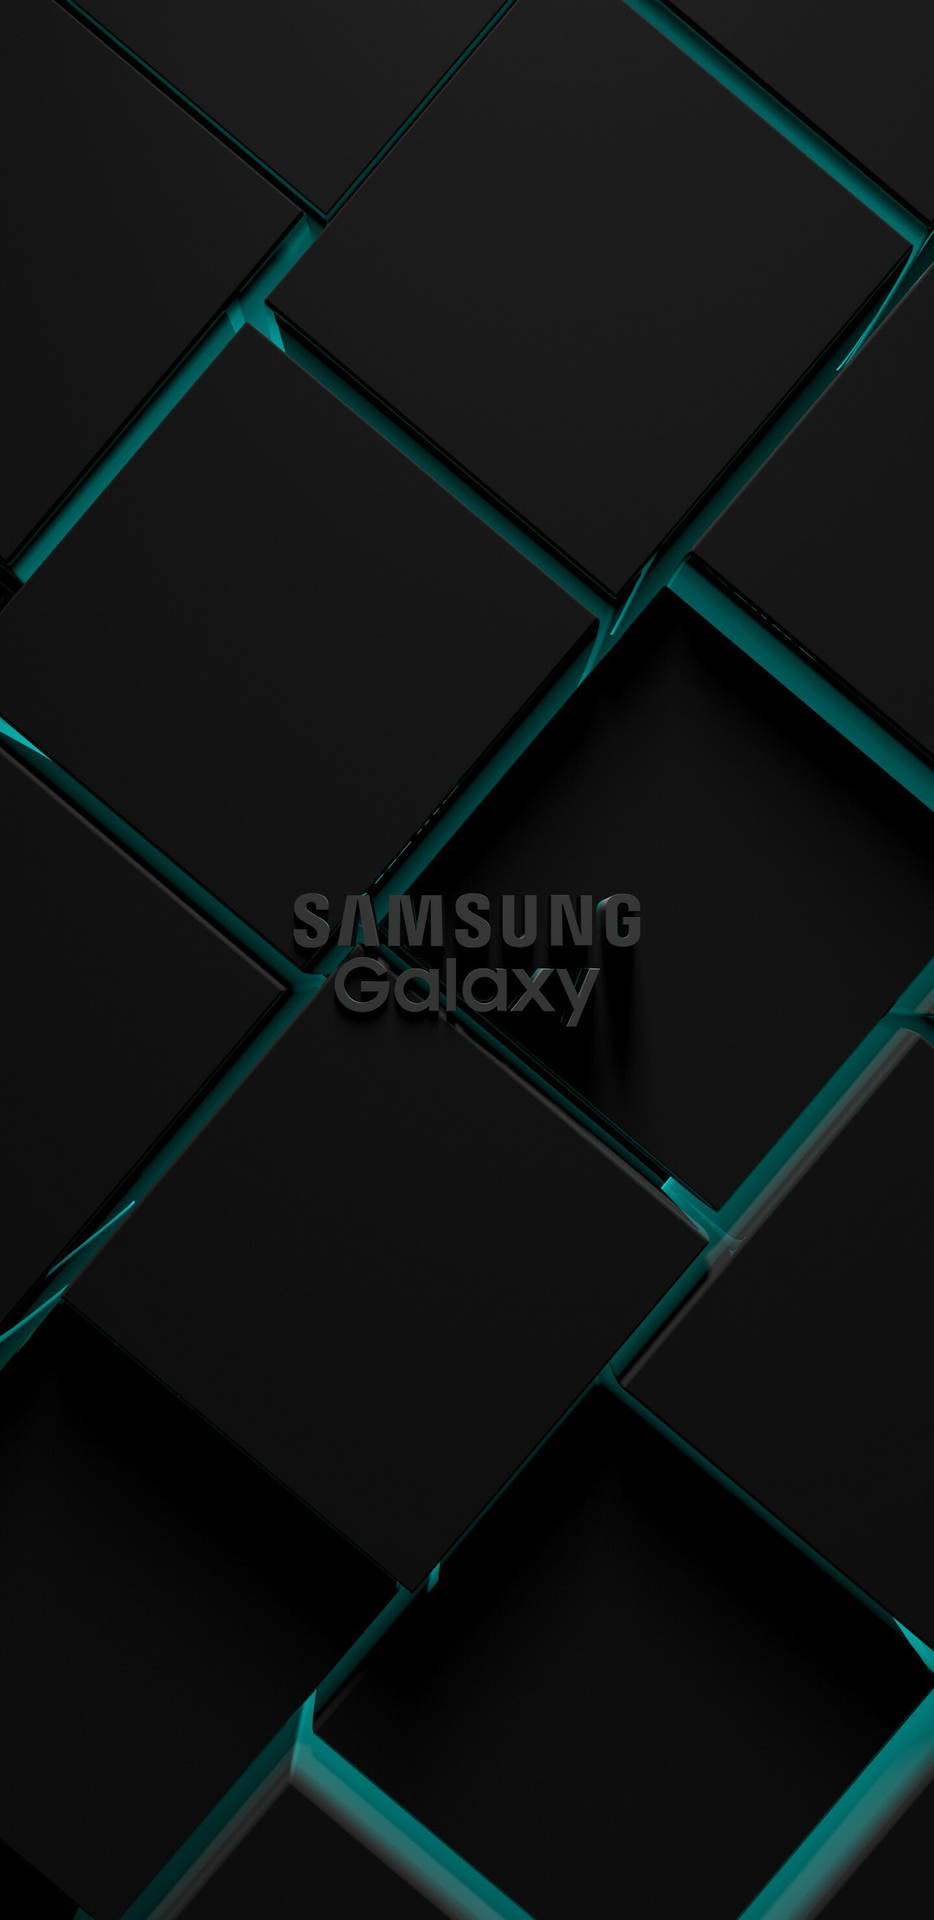 Samsung Galaxy 4k Logo Black Cubic Shapes Background